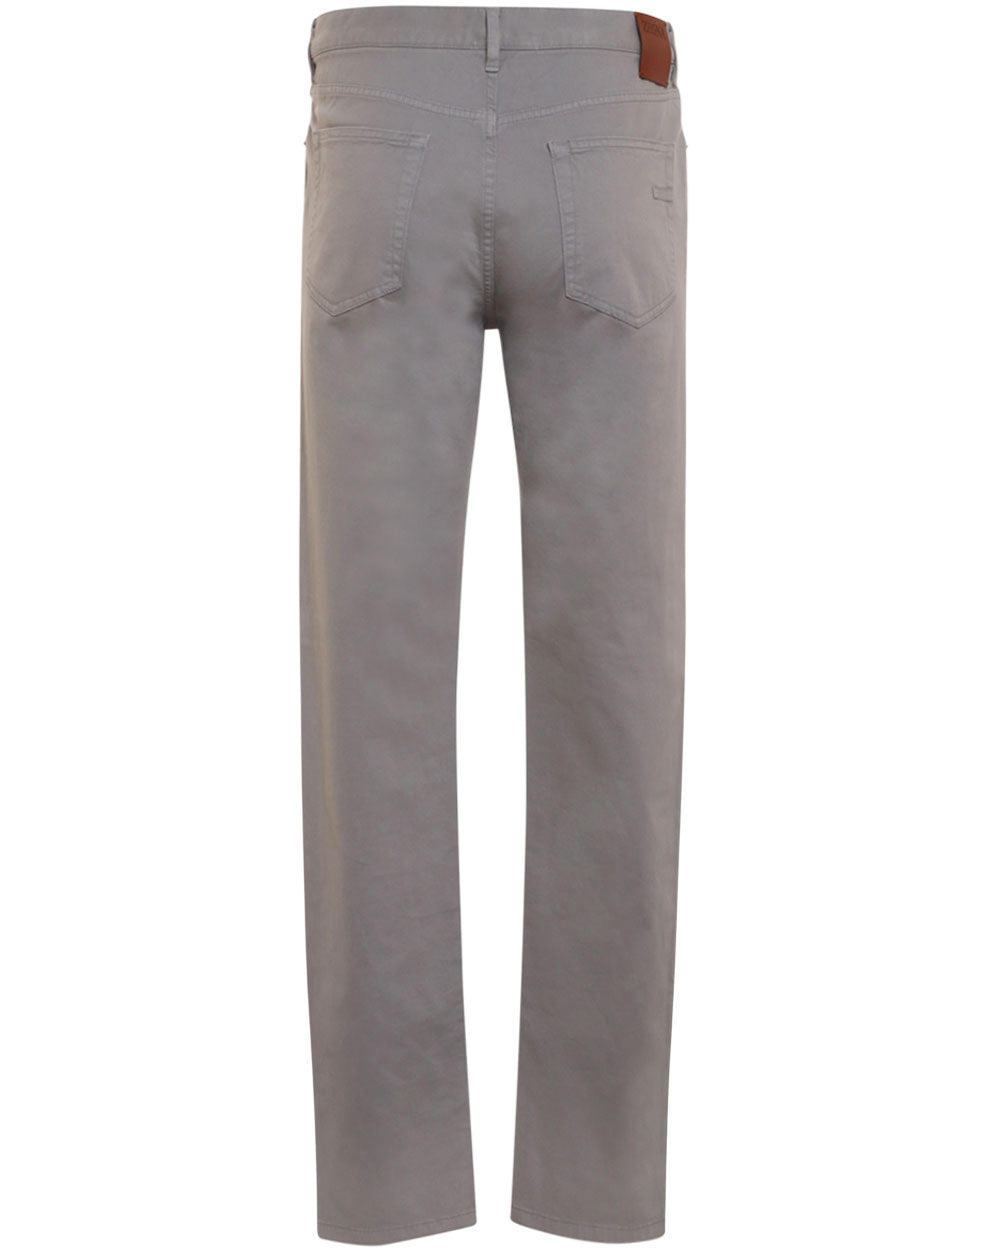 Grey Cotton Blend Casual Pant